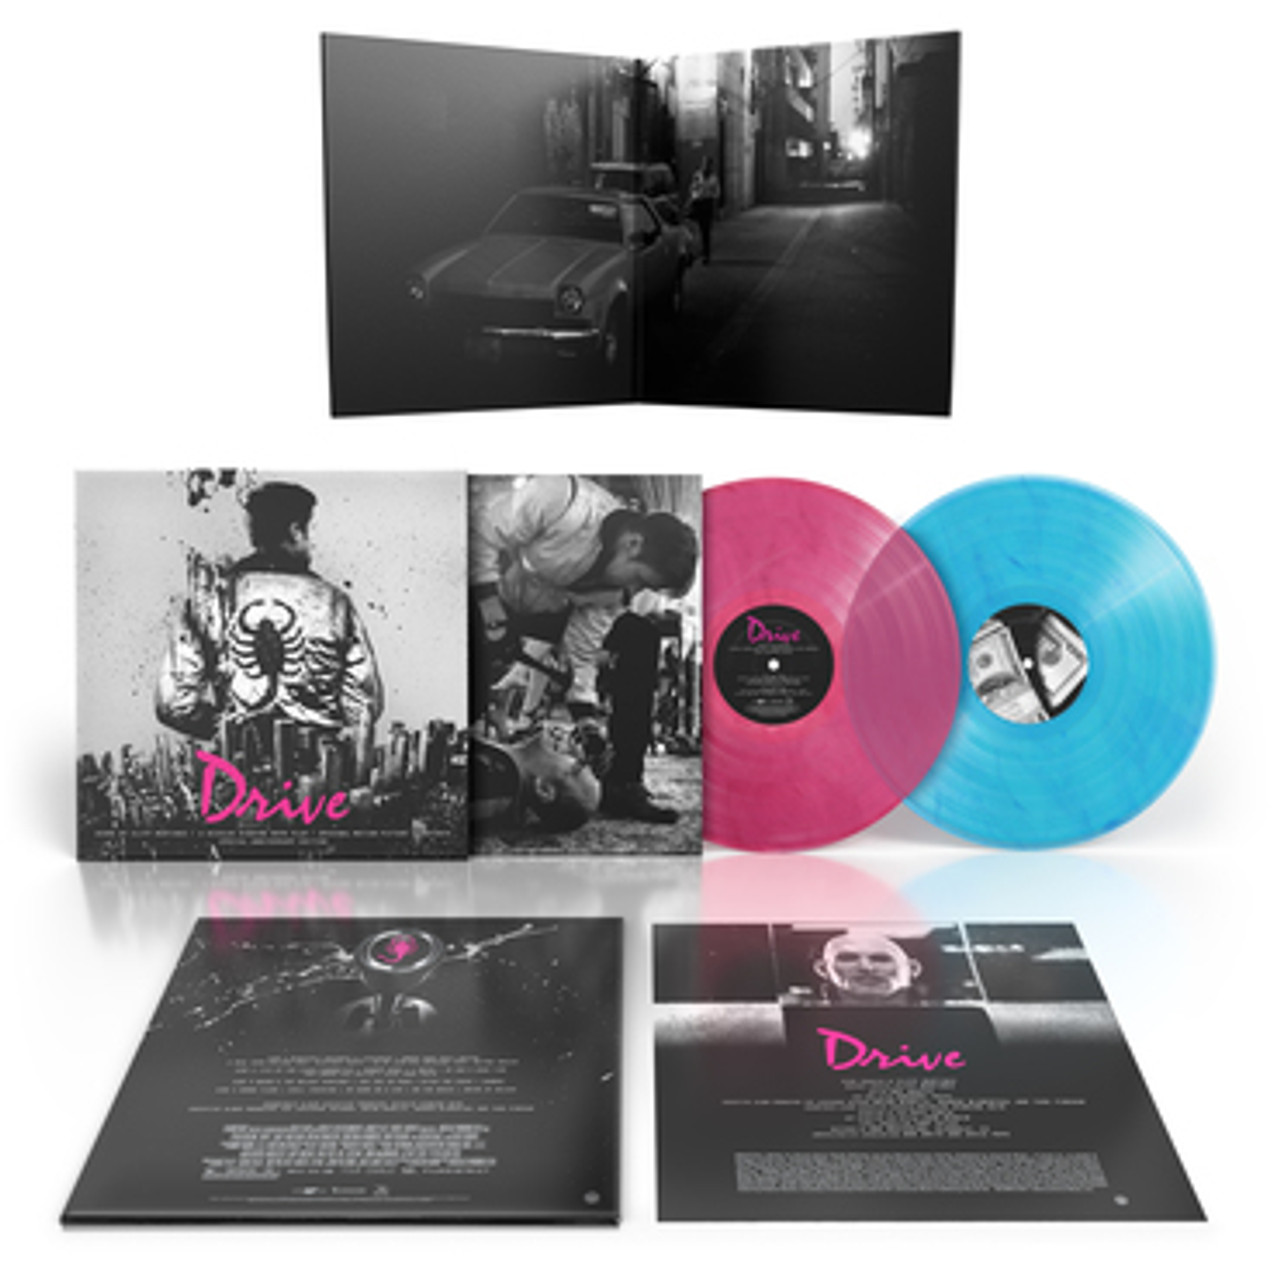 Double LP Pink & Blue marble discs